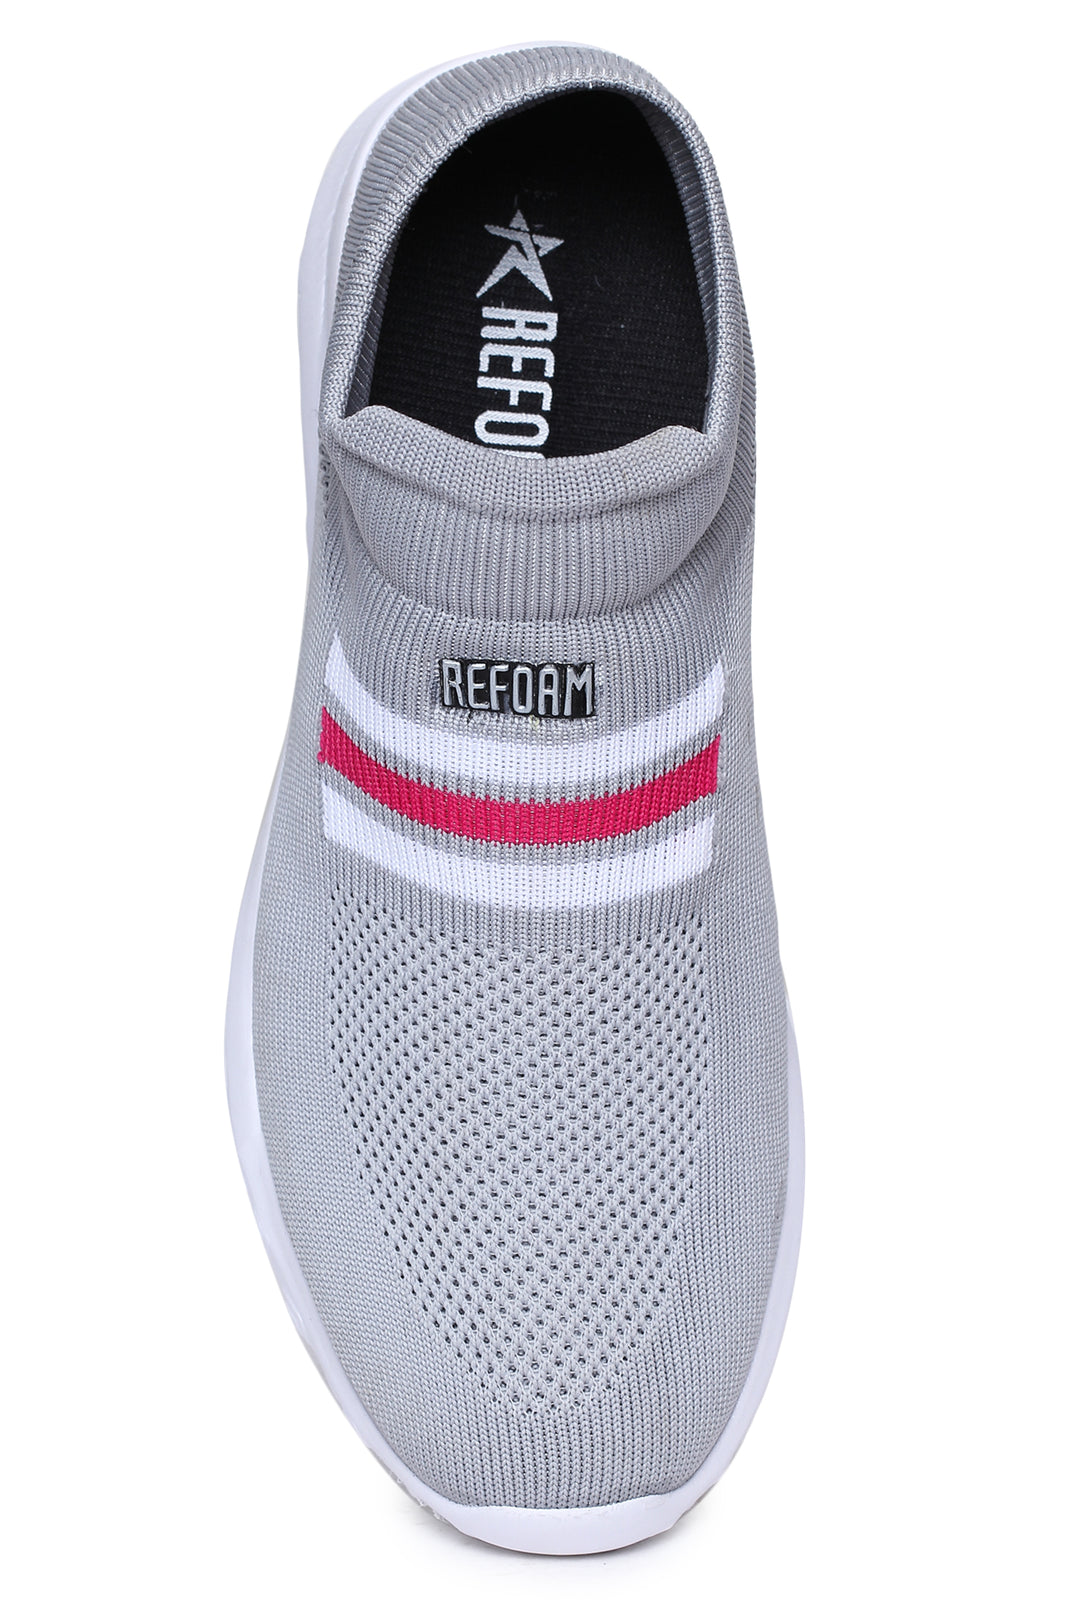 Grey Solid Mesh Slip On Running Sport Shoes For Women